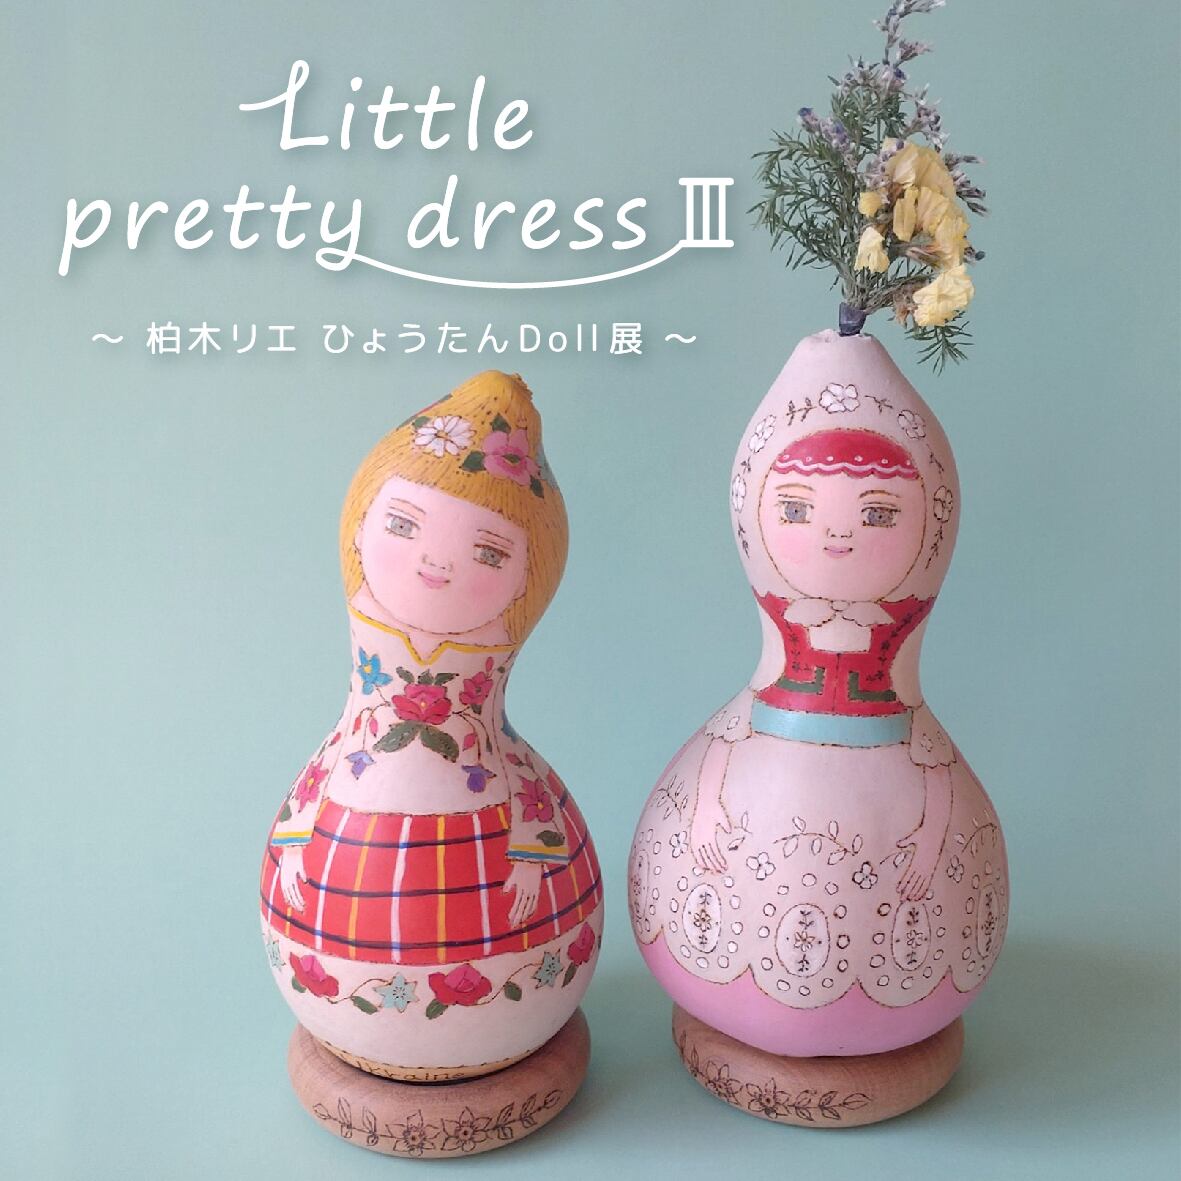 「Little pretty dress Ⅲ」<br>
～ 柏木リエ ひょうたんDoll展 ～